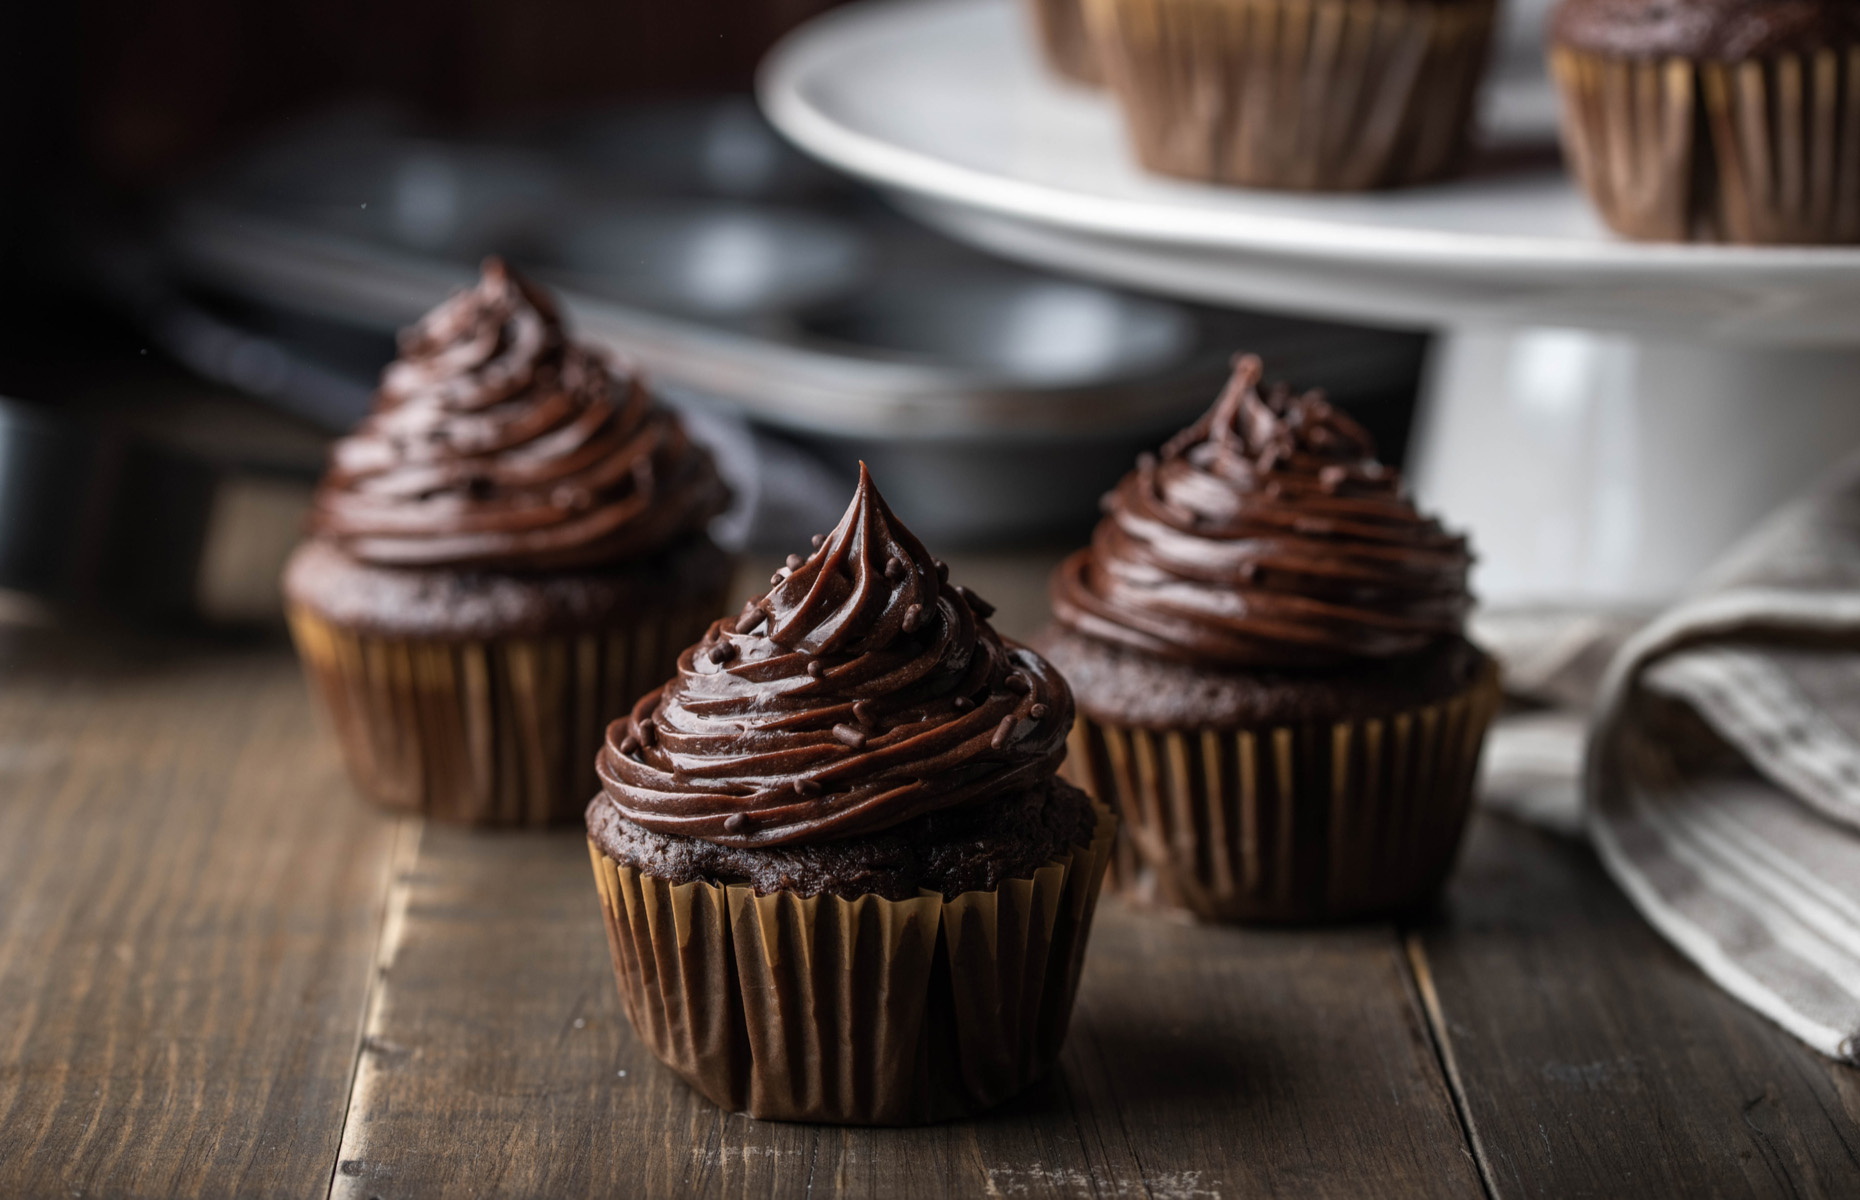 Chocolate cupcakes (Image: Atsushi Hirao/Shutterstock)